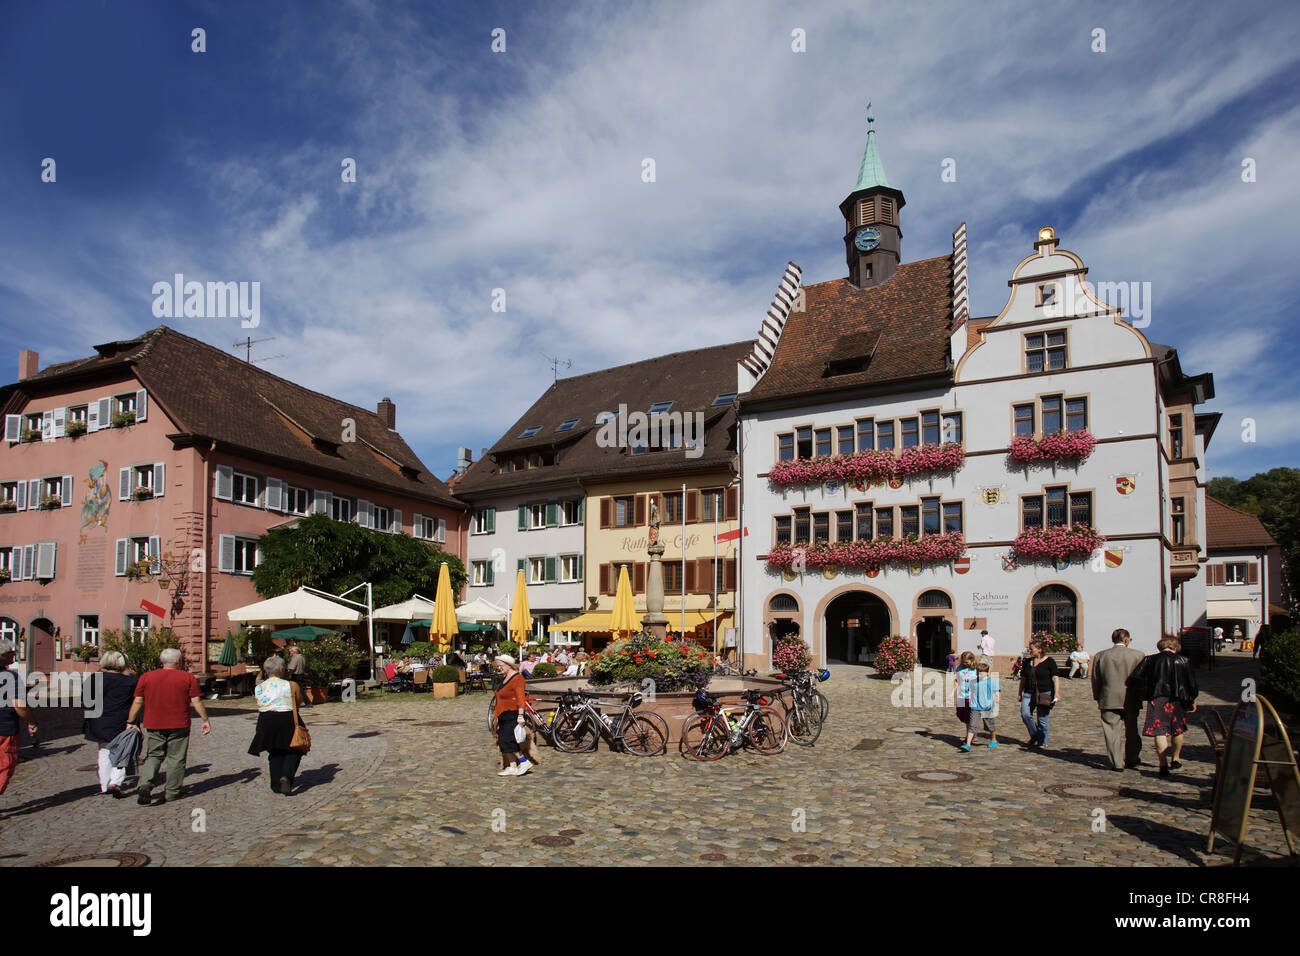 Il municipio storico, costruito nel 1546, Marktplatz square in Staufen im Breisgau, Foresta Nera meridionale, Baden-Wuerttemberg Foto Stock